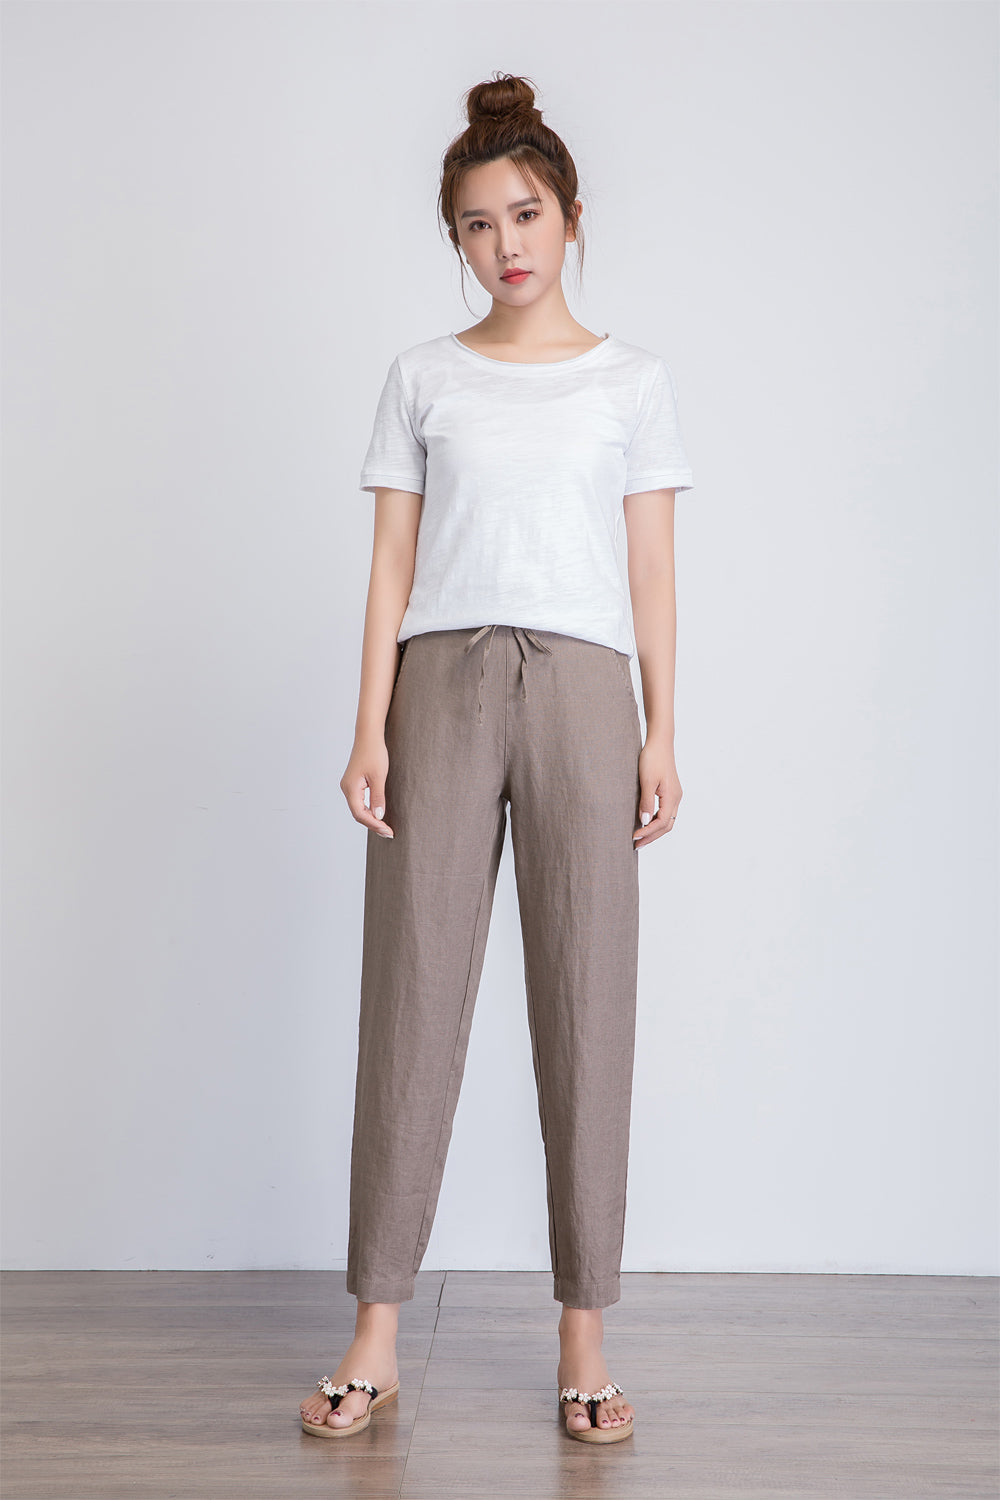  Casual Cotton Linen 3/4 Pants for Women Drawstring